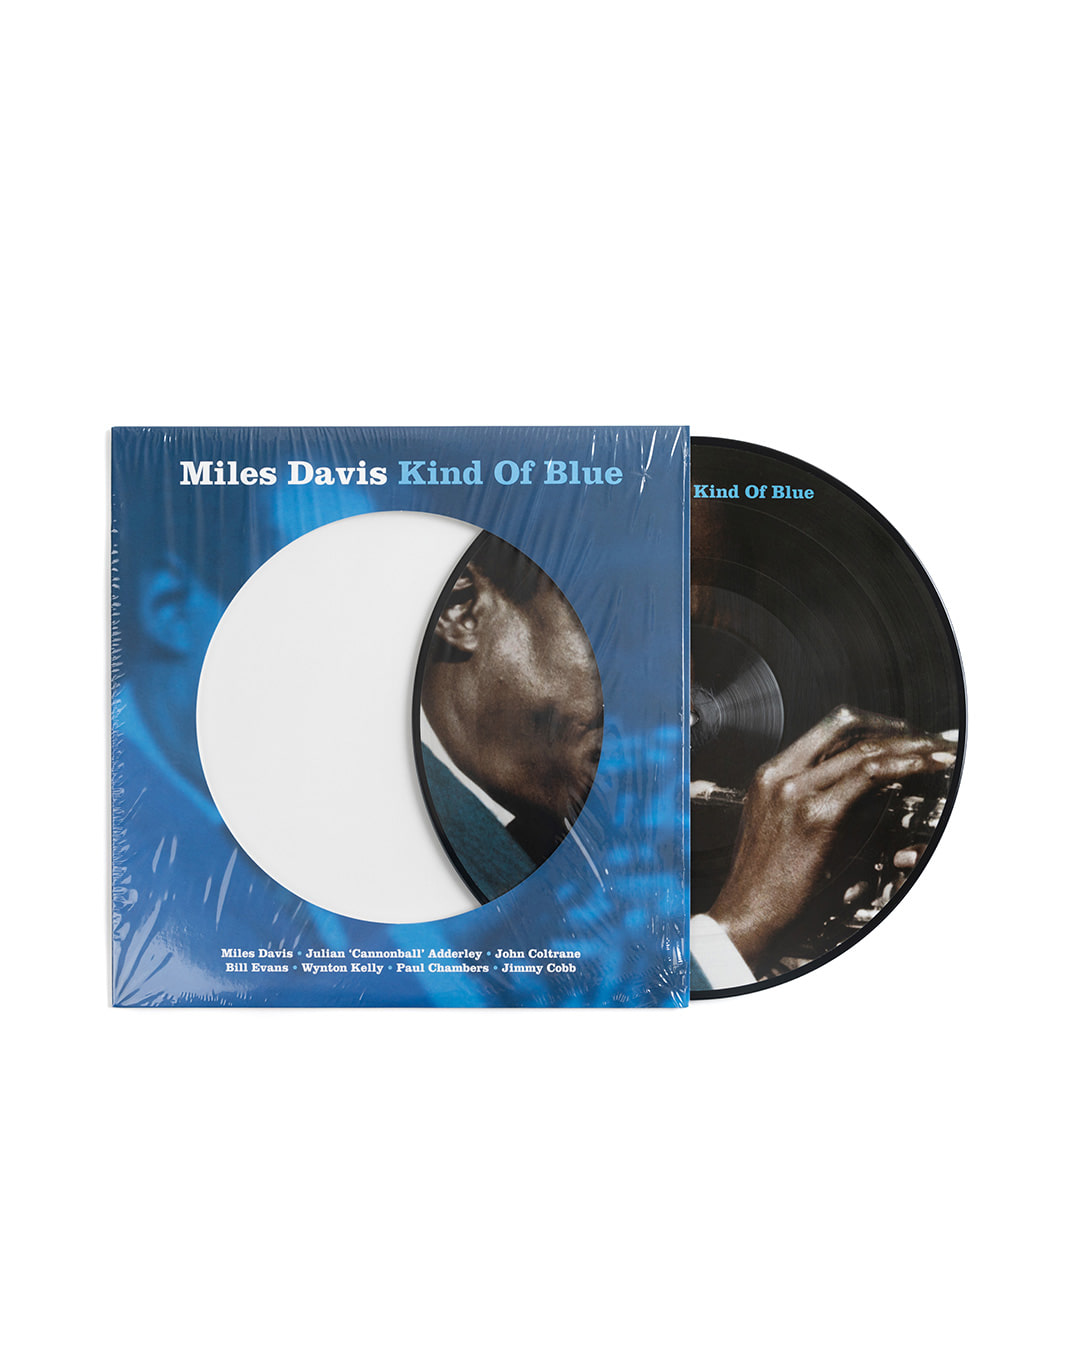 MILES DAVIS - KIND OF BLUE (picture disc)